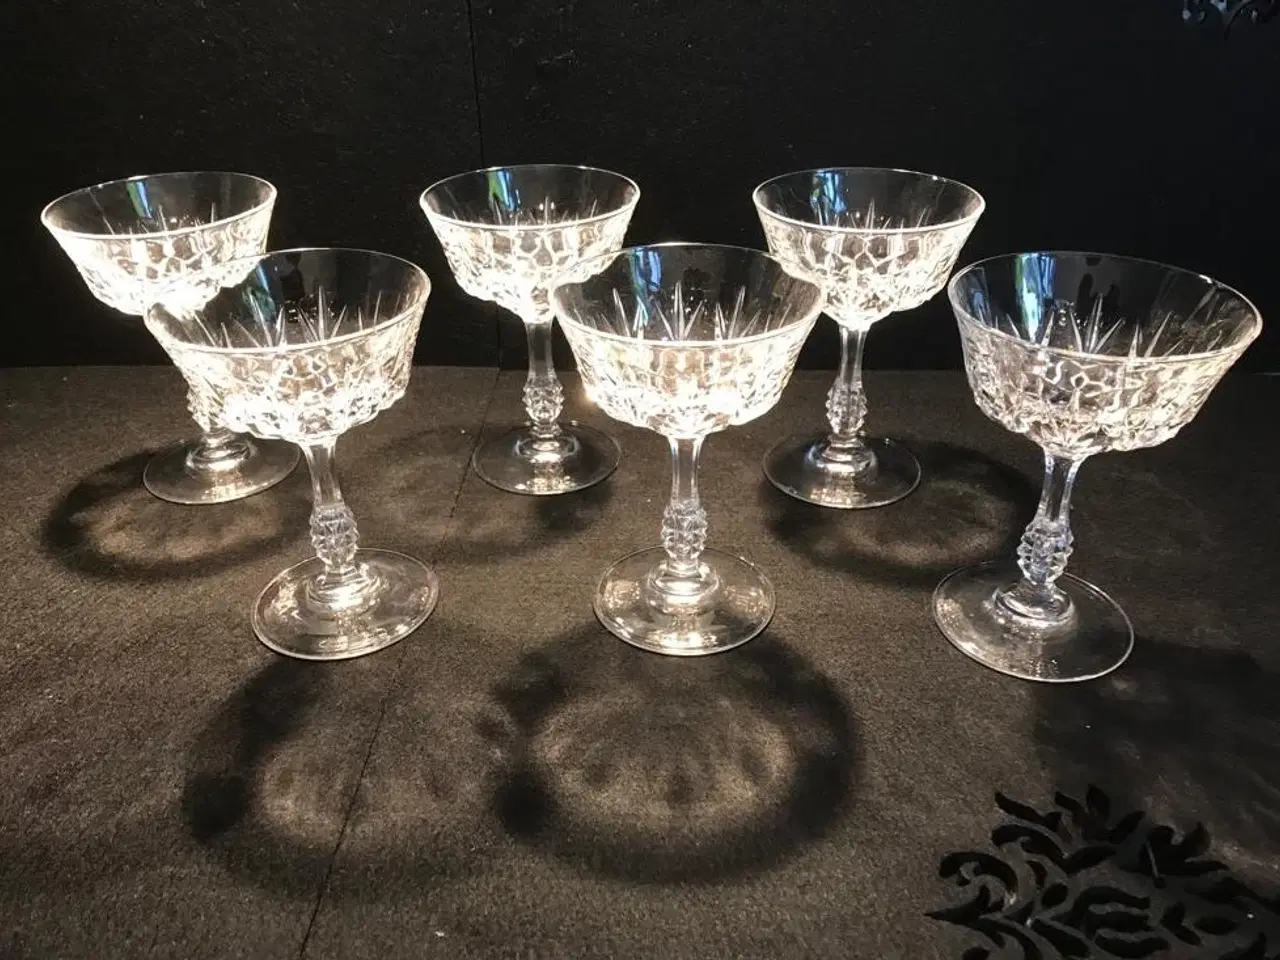 Billede 3 - Udsalg!Unikke, vintage krystalle glas/karafler